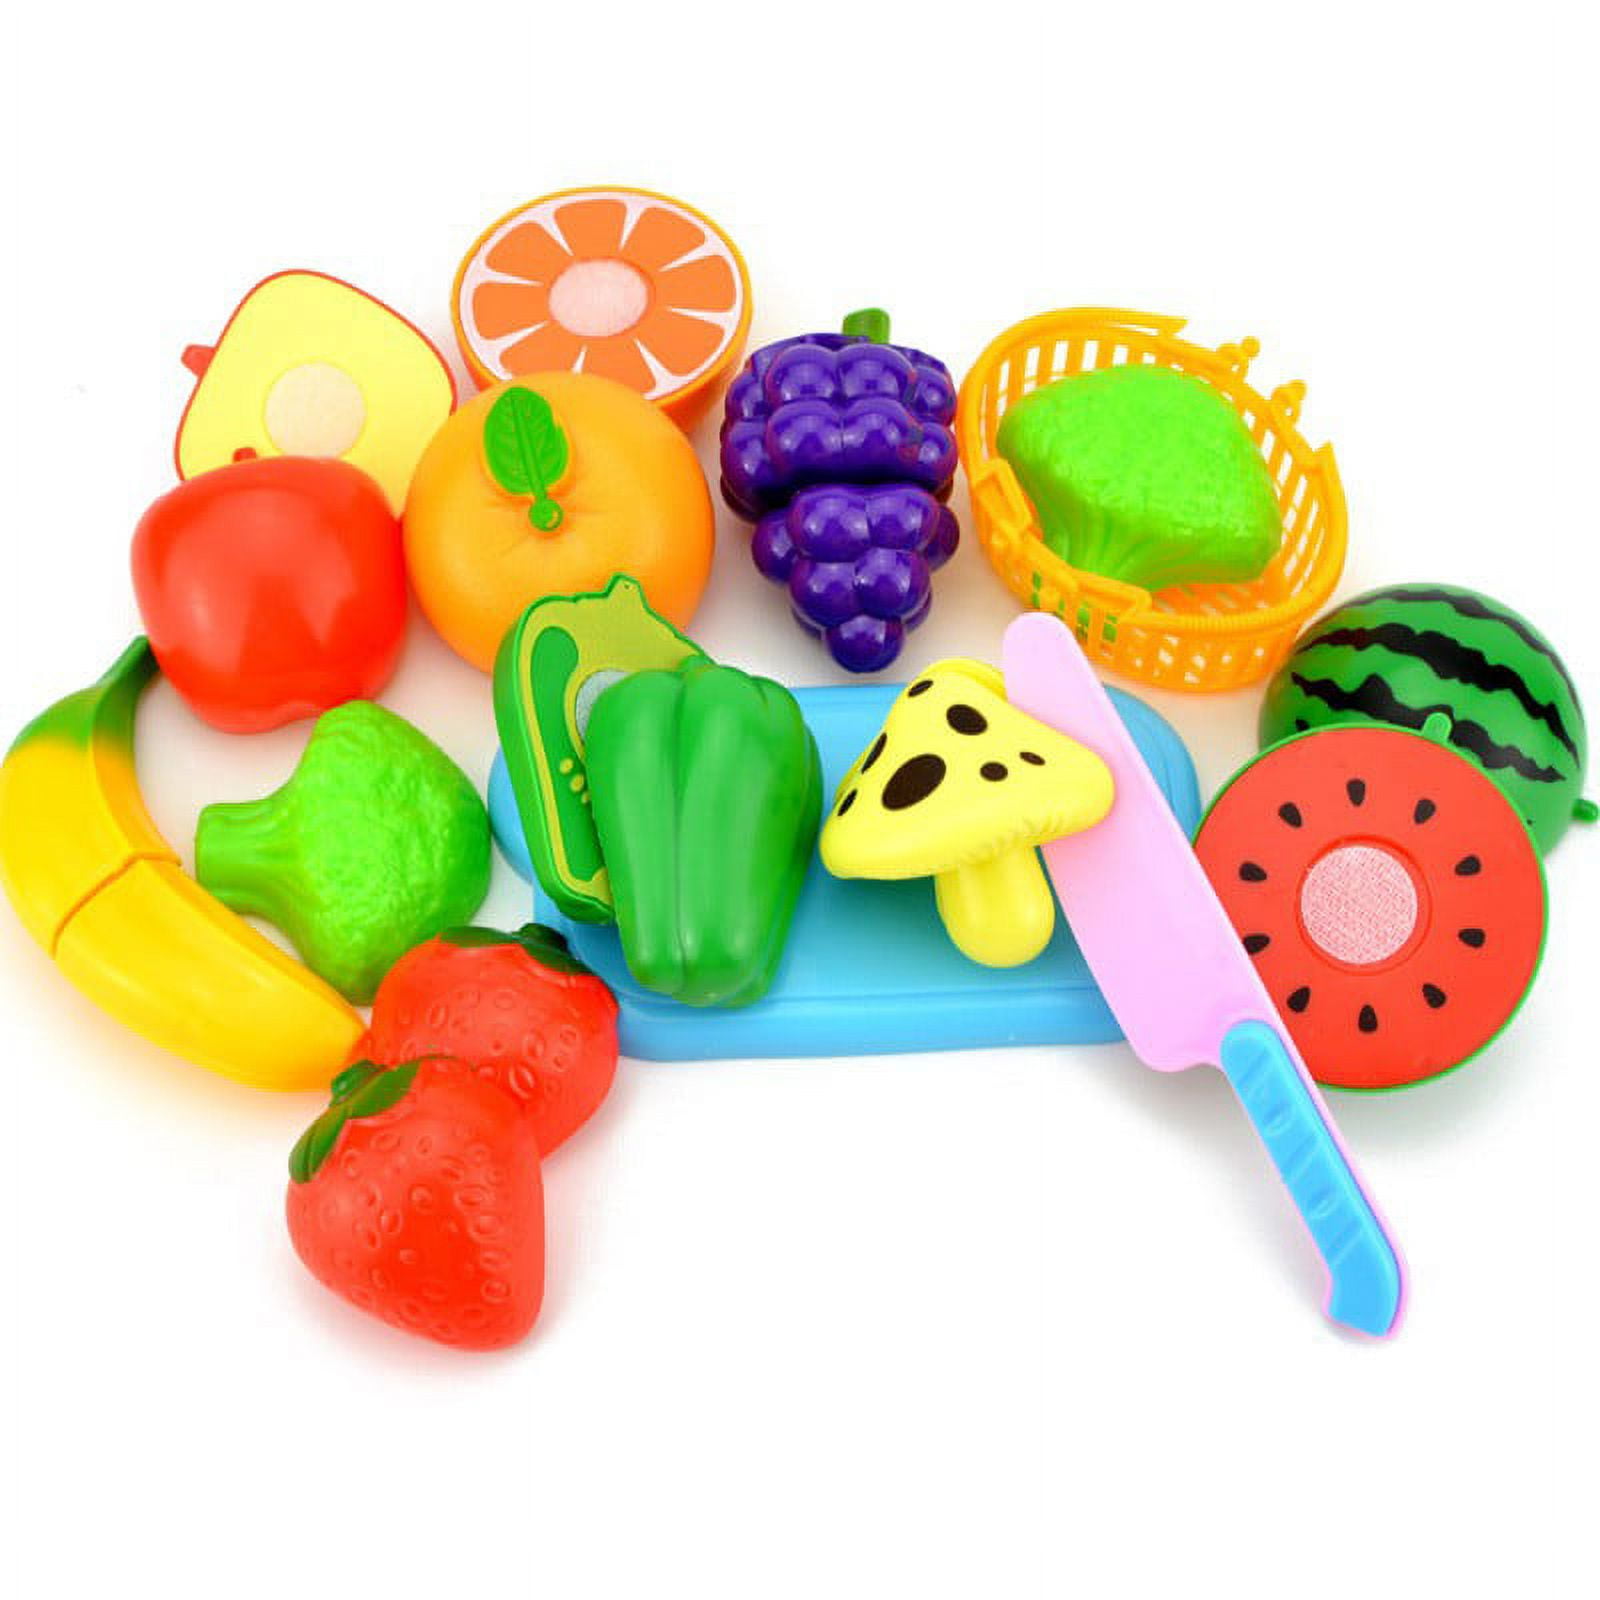 2020 New Arrival Healthy Plastic Cake Fruit Vegetable Kids Safety